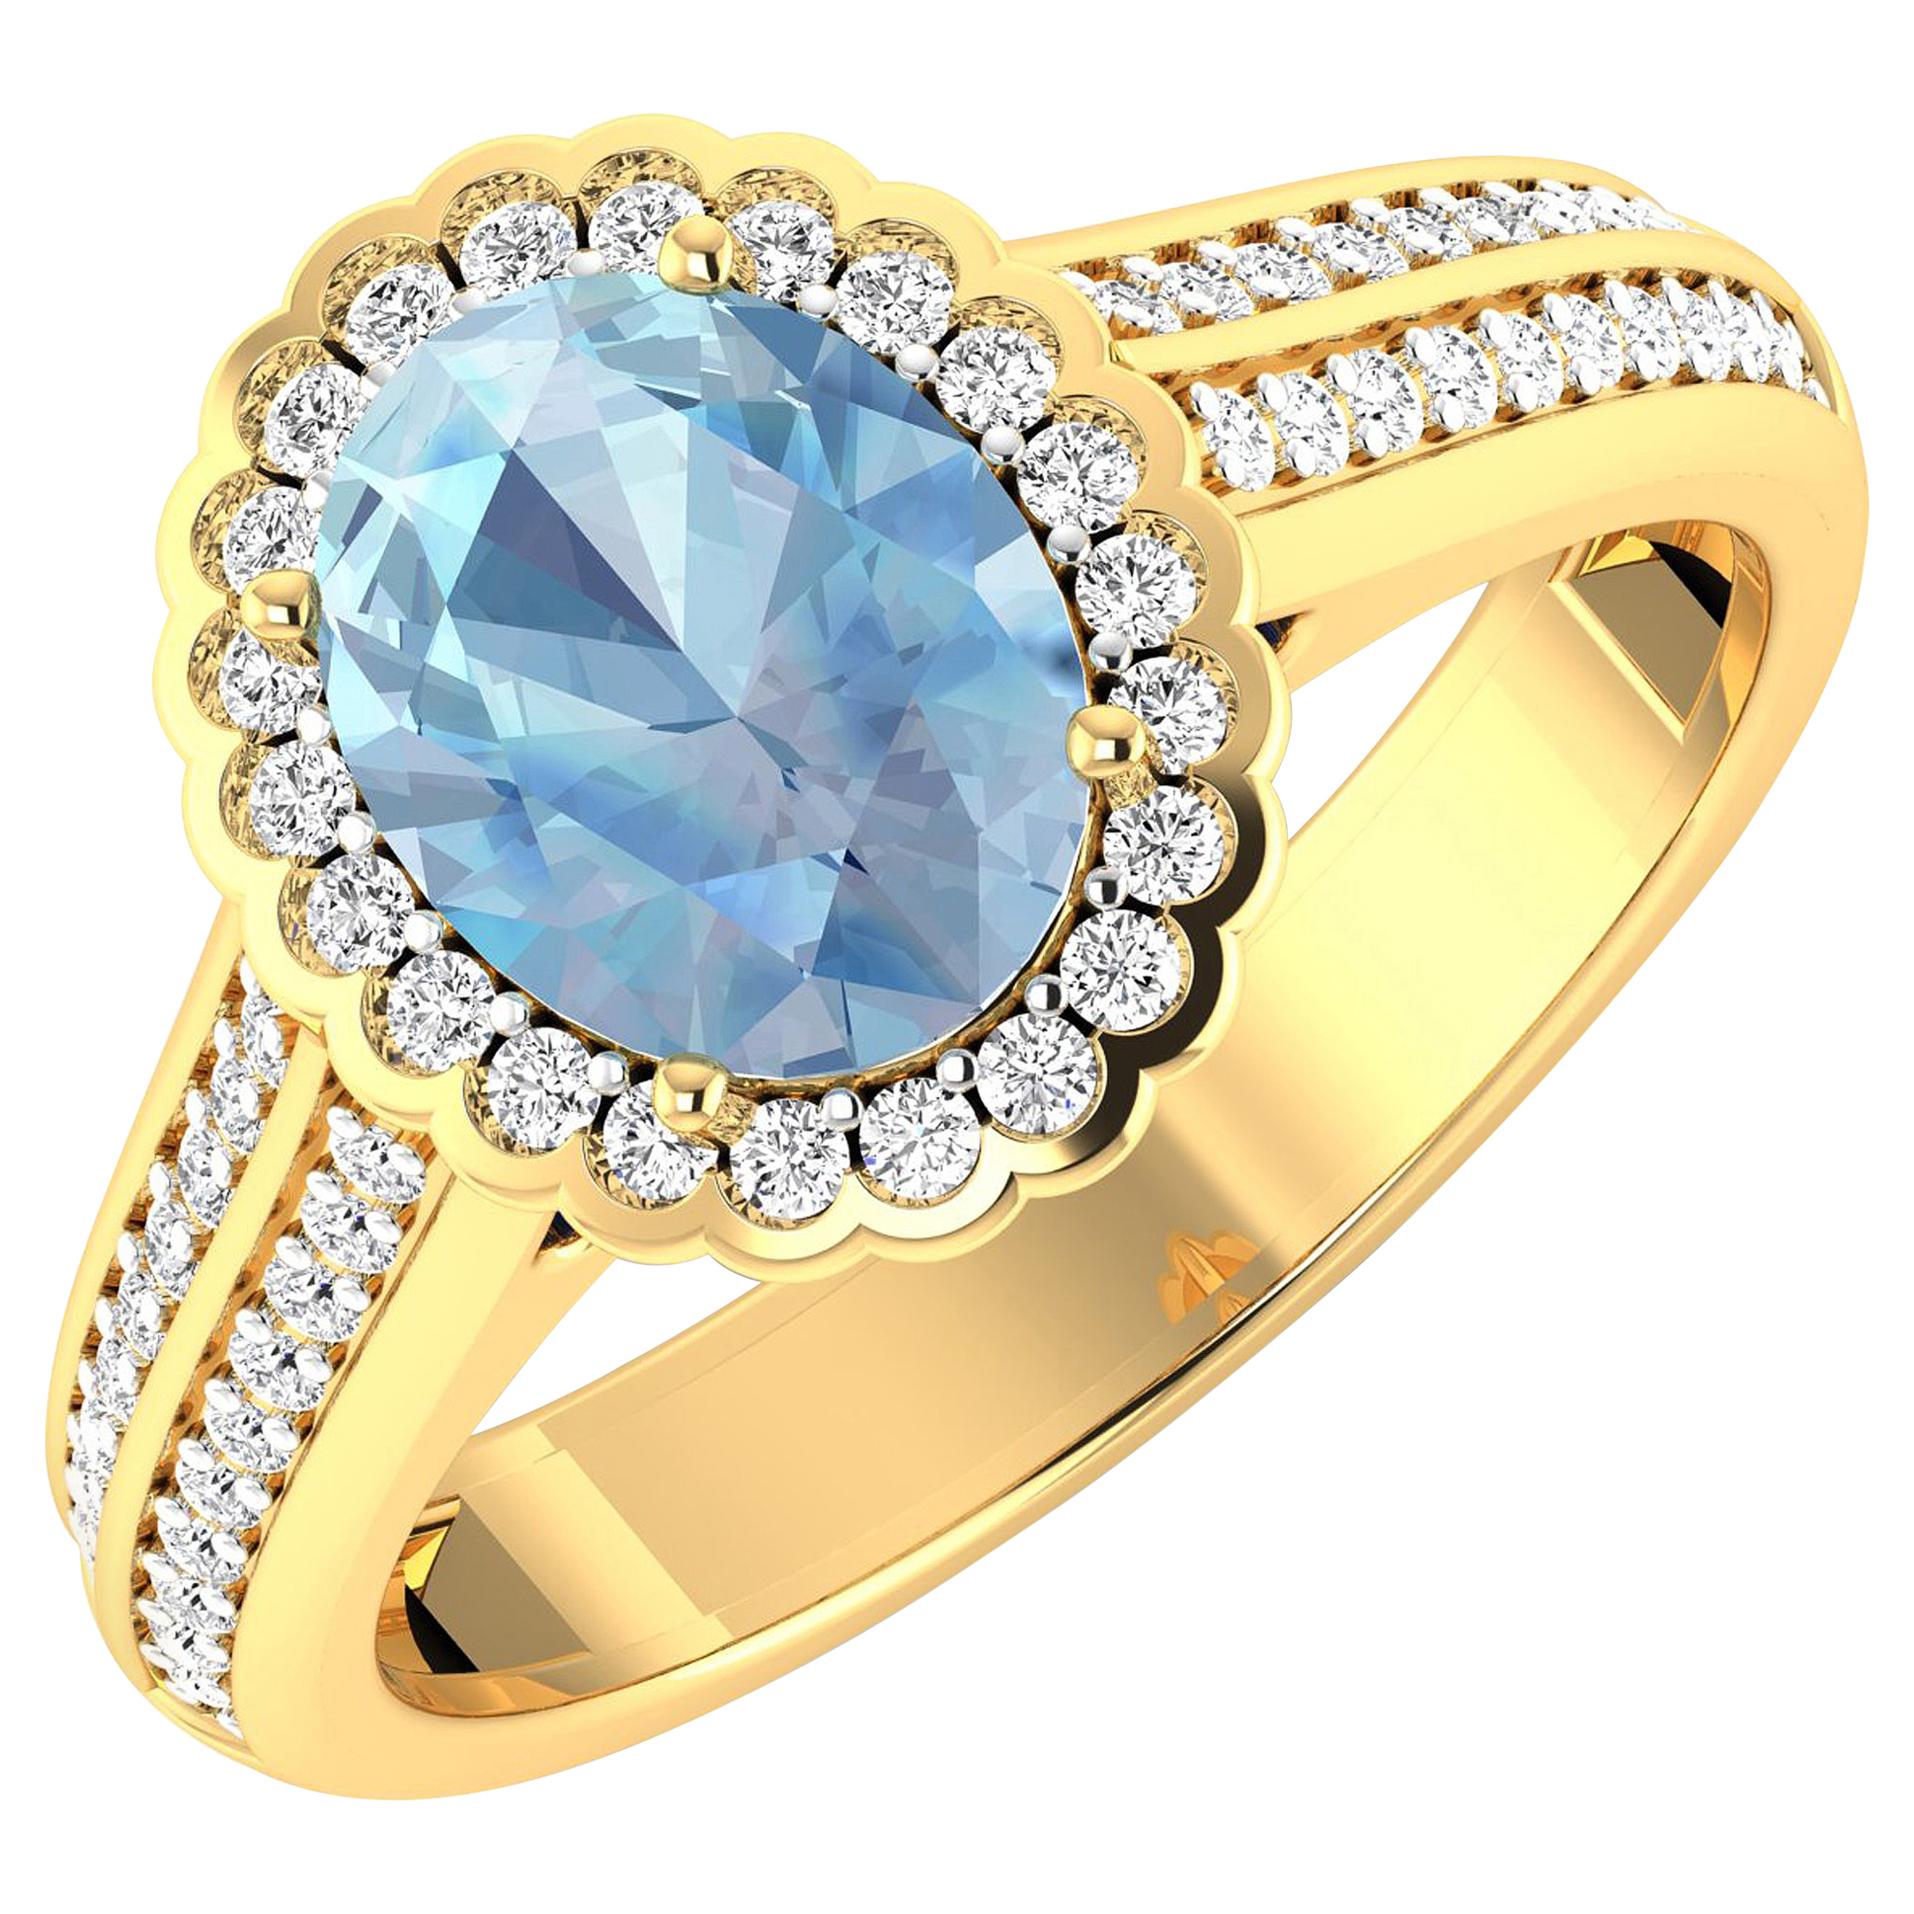 Aquamarine Gold Ring, 14 Karat Gold Aquamarine and Diamond Ring, 1.82 Carat For Sale